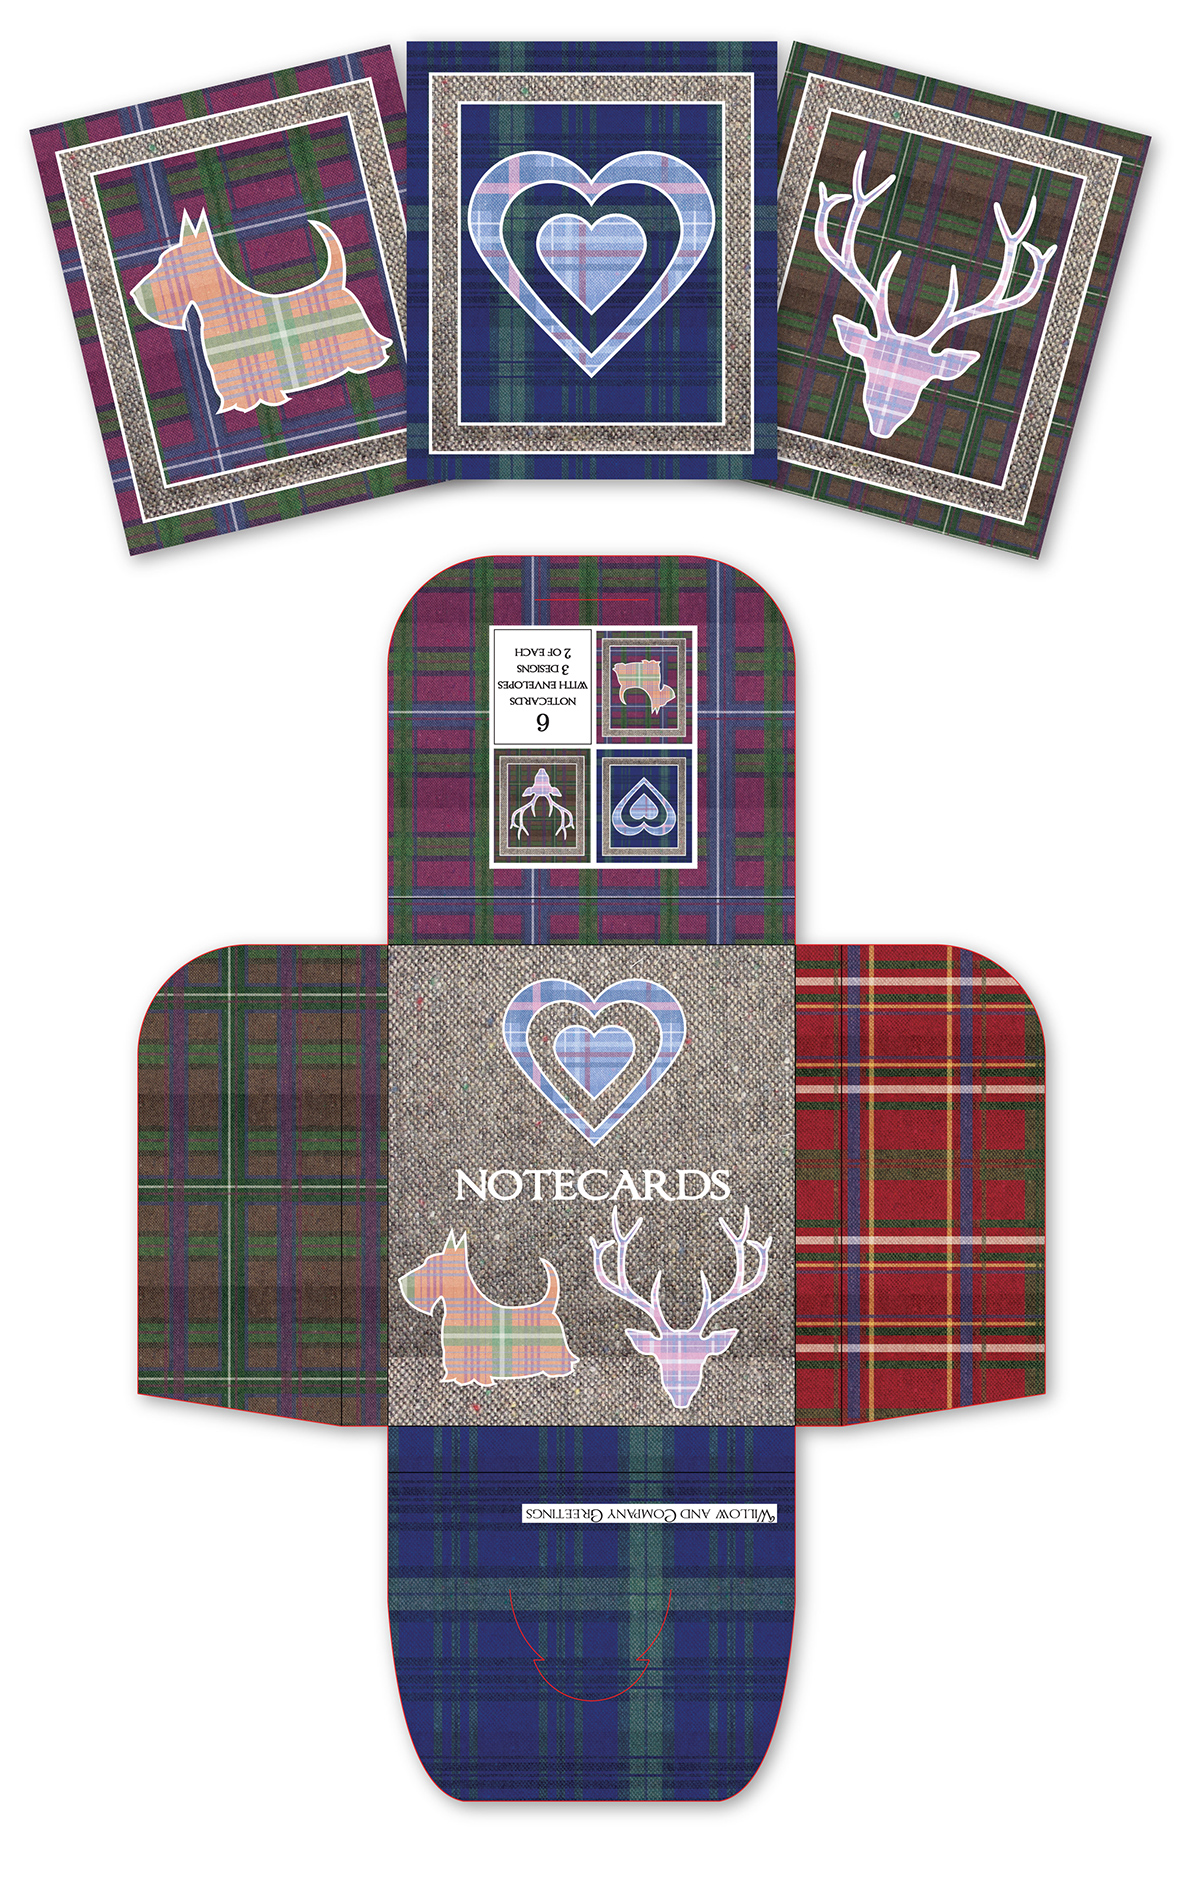 greetingscard design scotland scottish souvenirs stag angel gift dog scottiedog